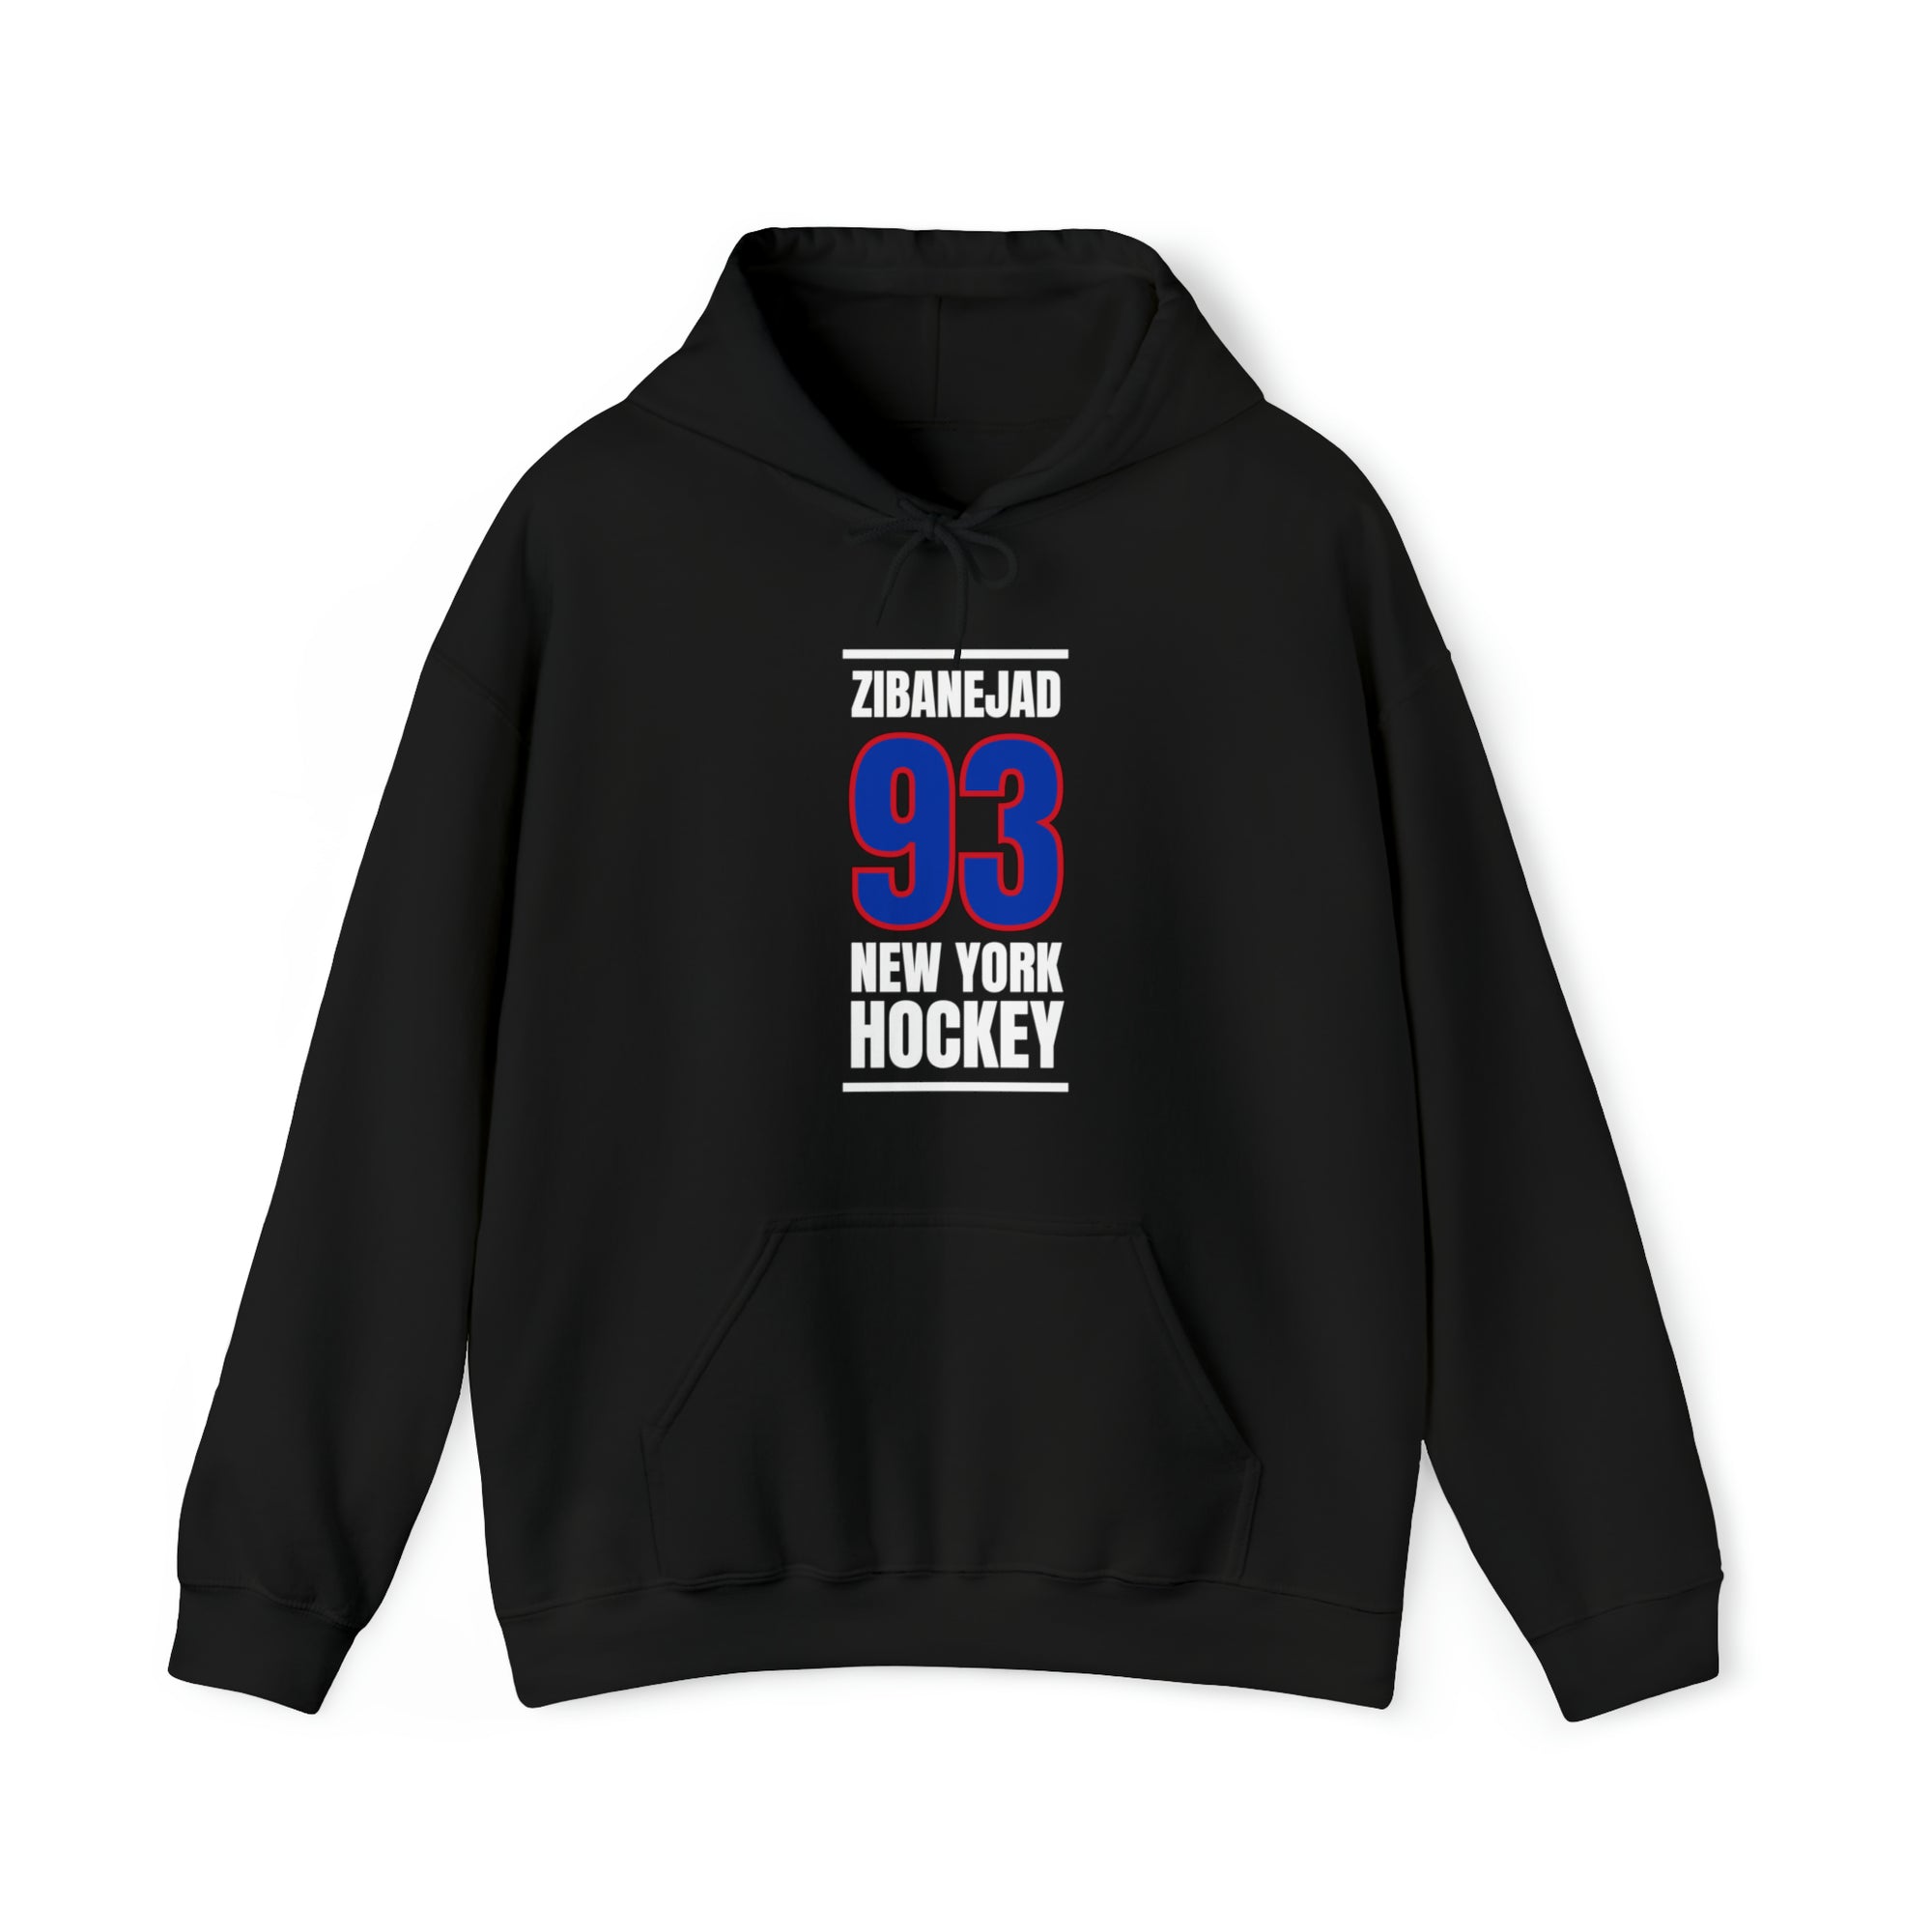 Zibanejad 93 New York Hockey Royal Blue Vertical Design Unisex Hooded Sweatshirt